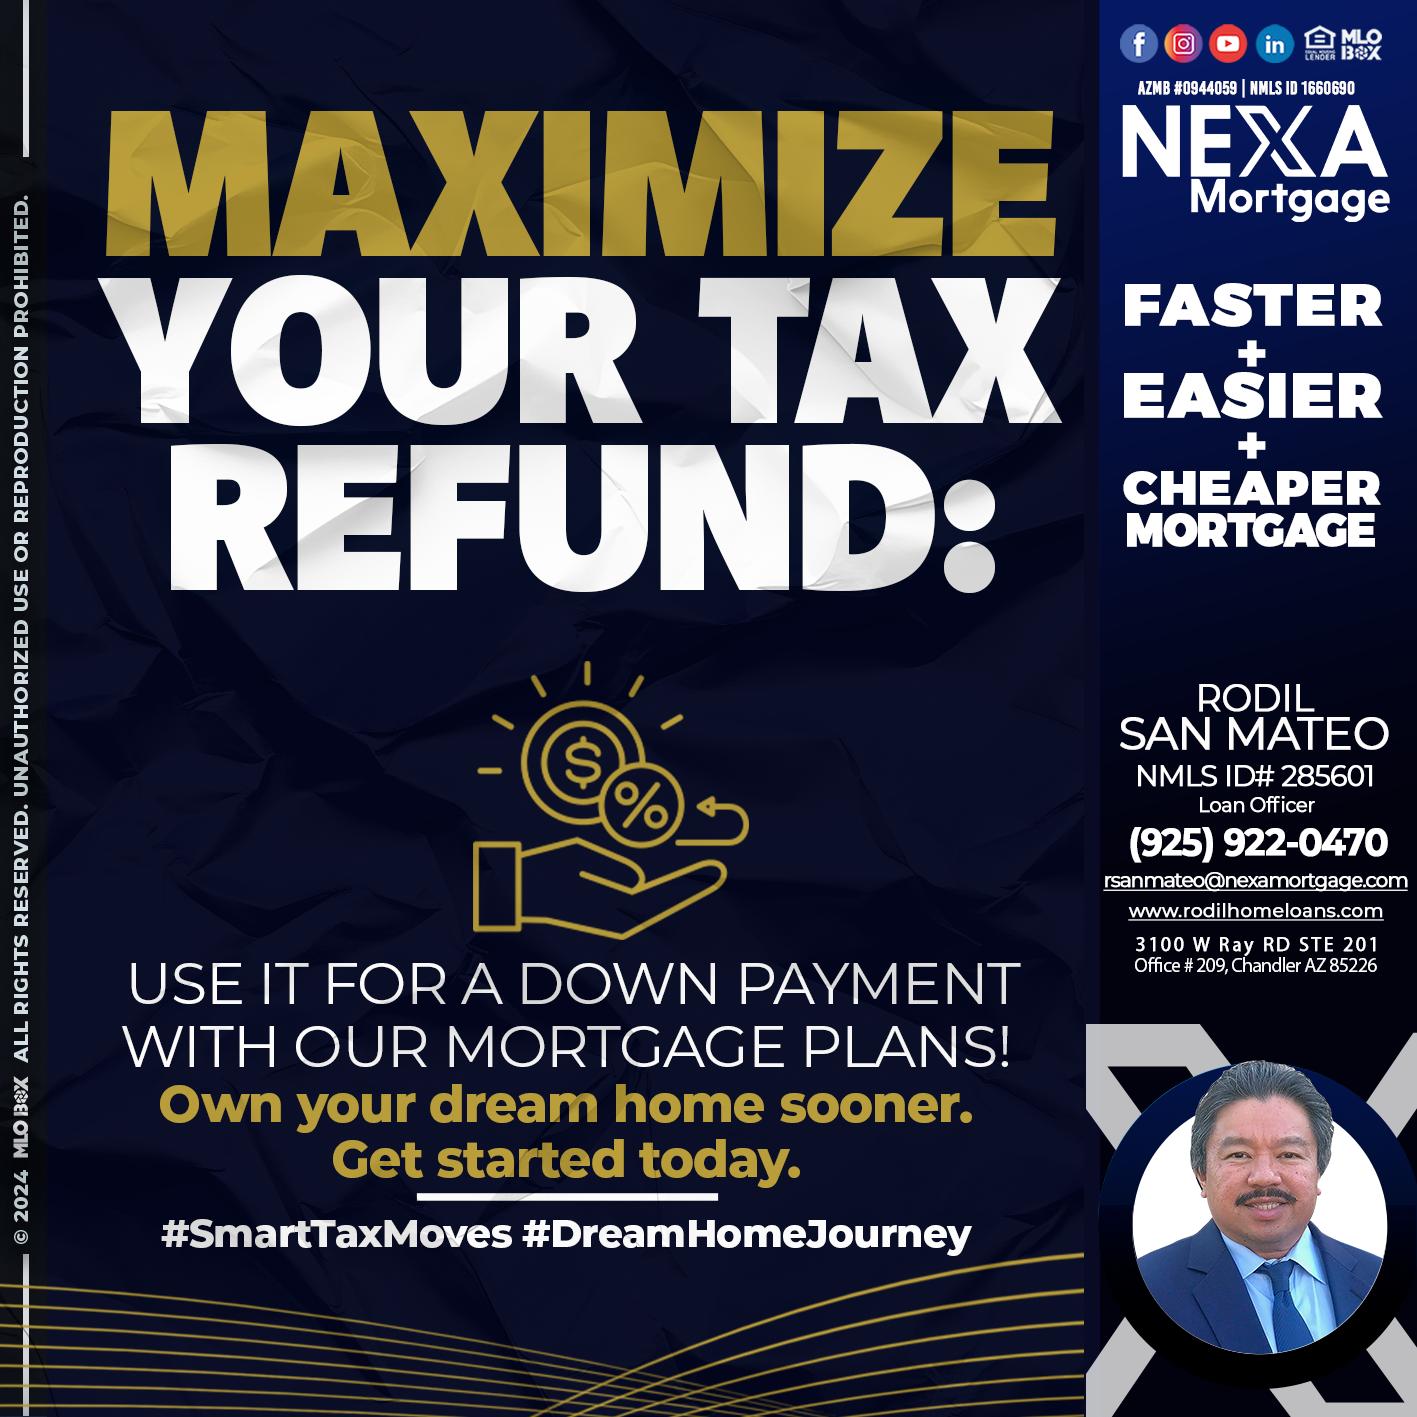 maximize - Rodil San Mateo -Loan Officer